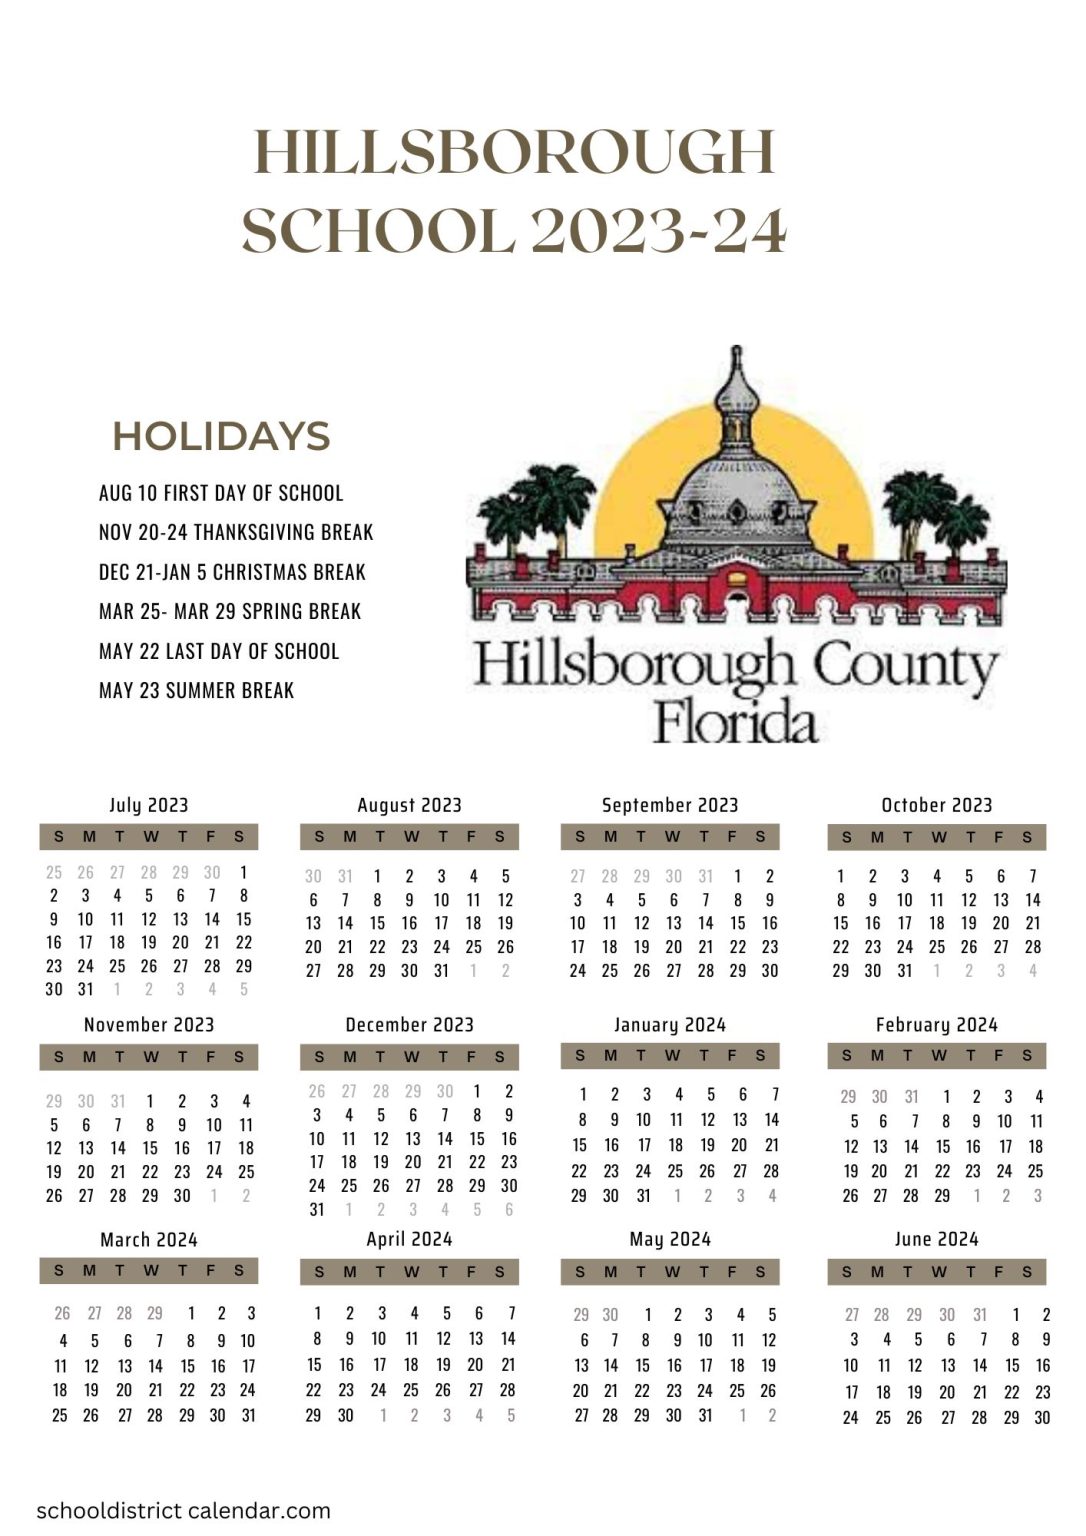 hillsborough-county-school-district-calendar-holidays-2023-2024